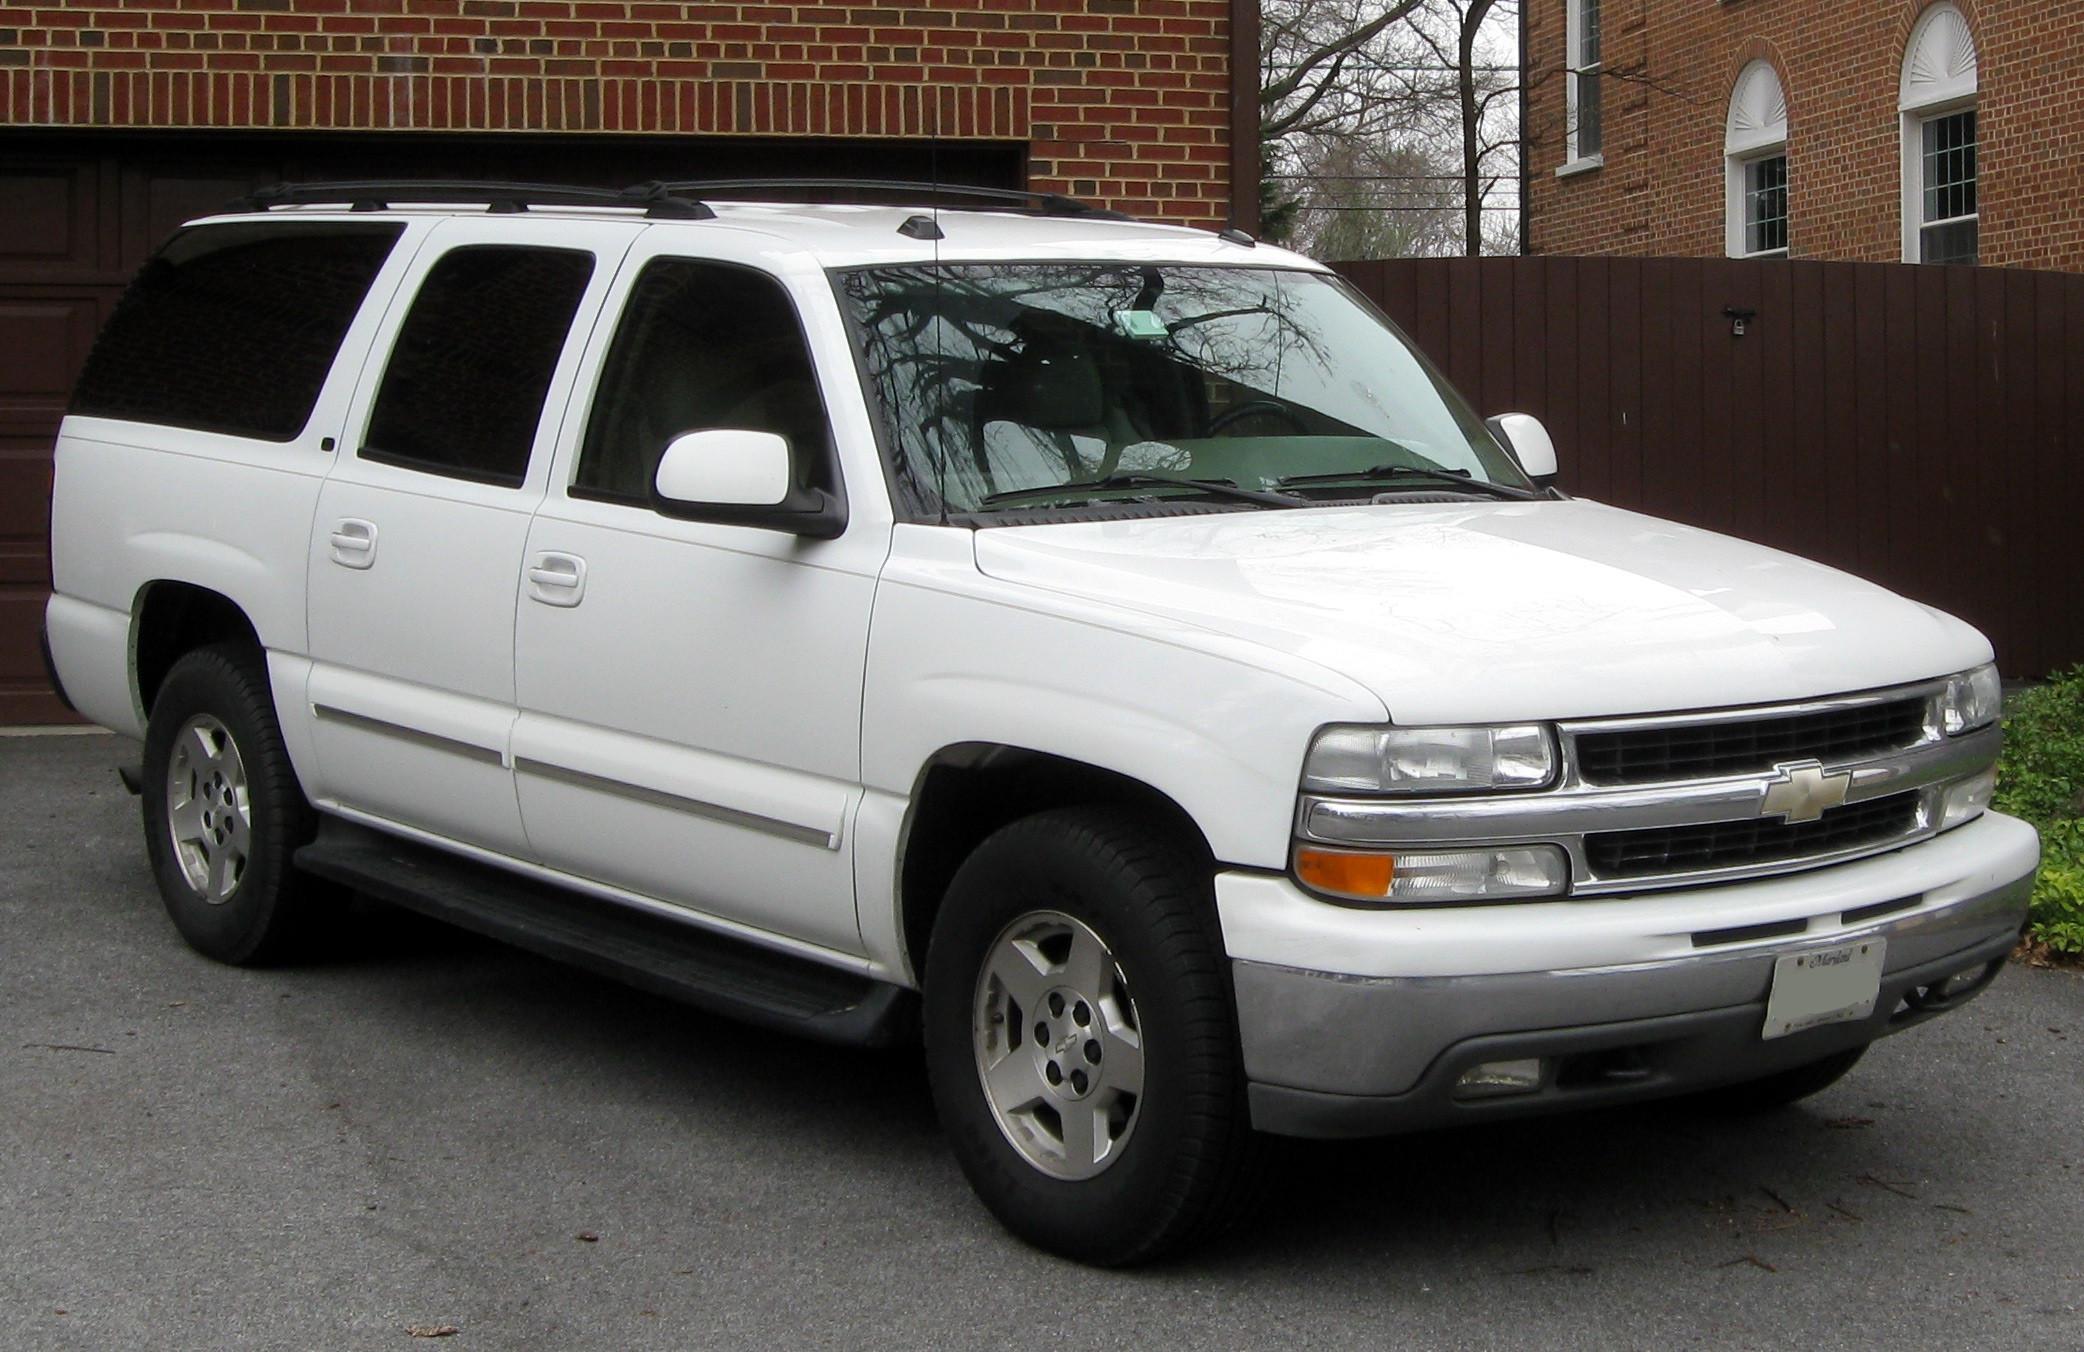 Chevrolet Suburban GMT800 (Wikimedia Commons)